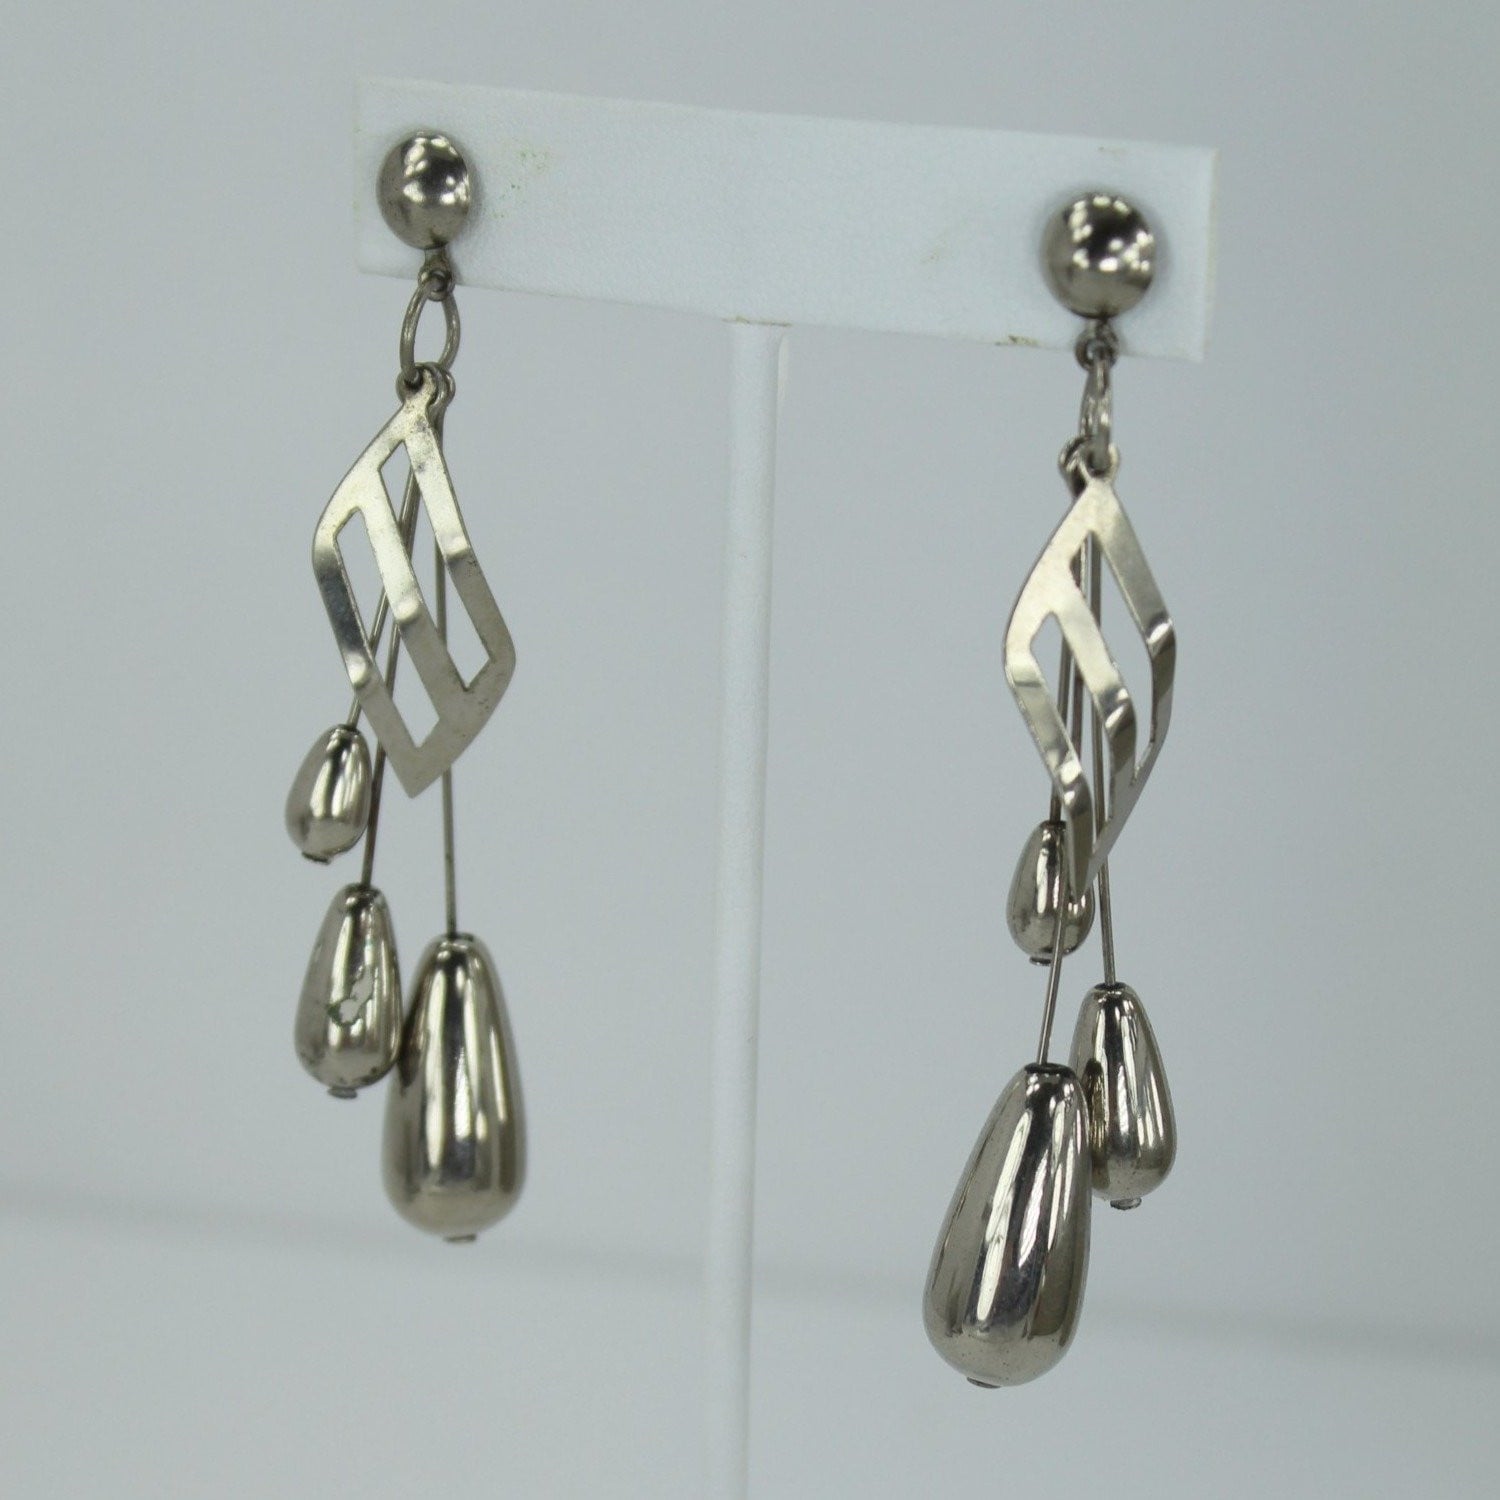 Long Modernist Earrings Post Lightweight Silver Tone Baubles Dangle Unique